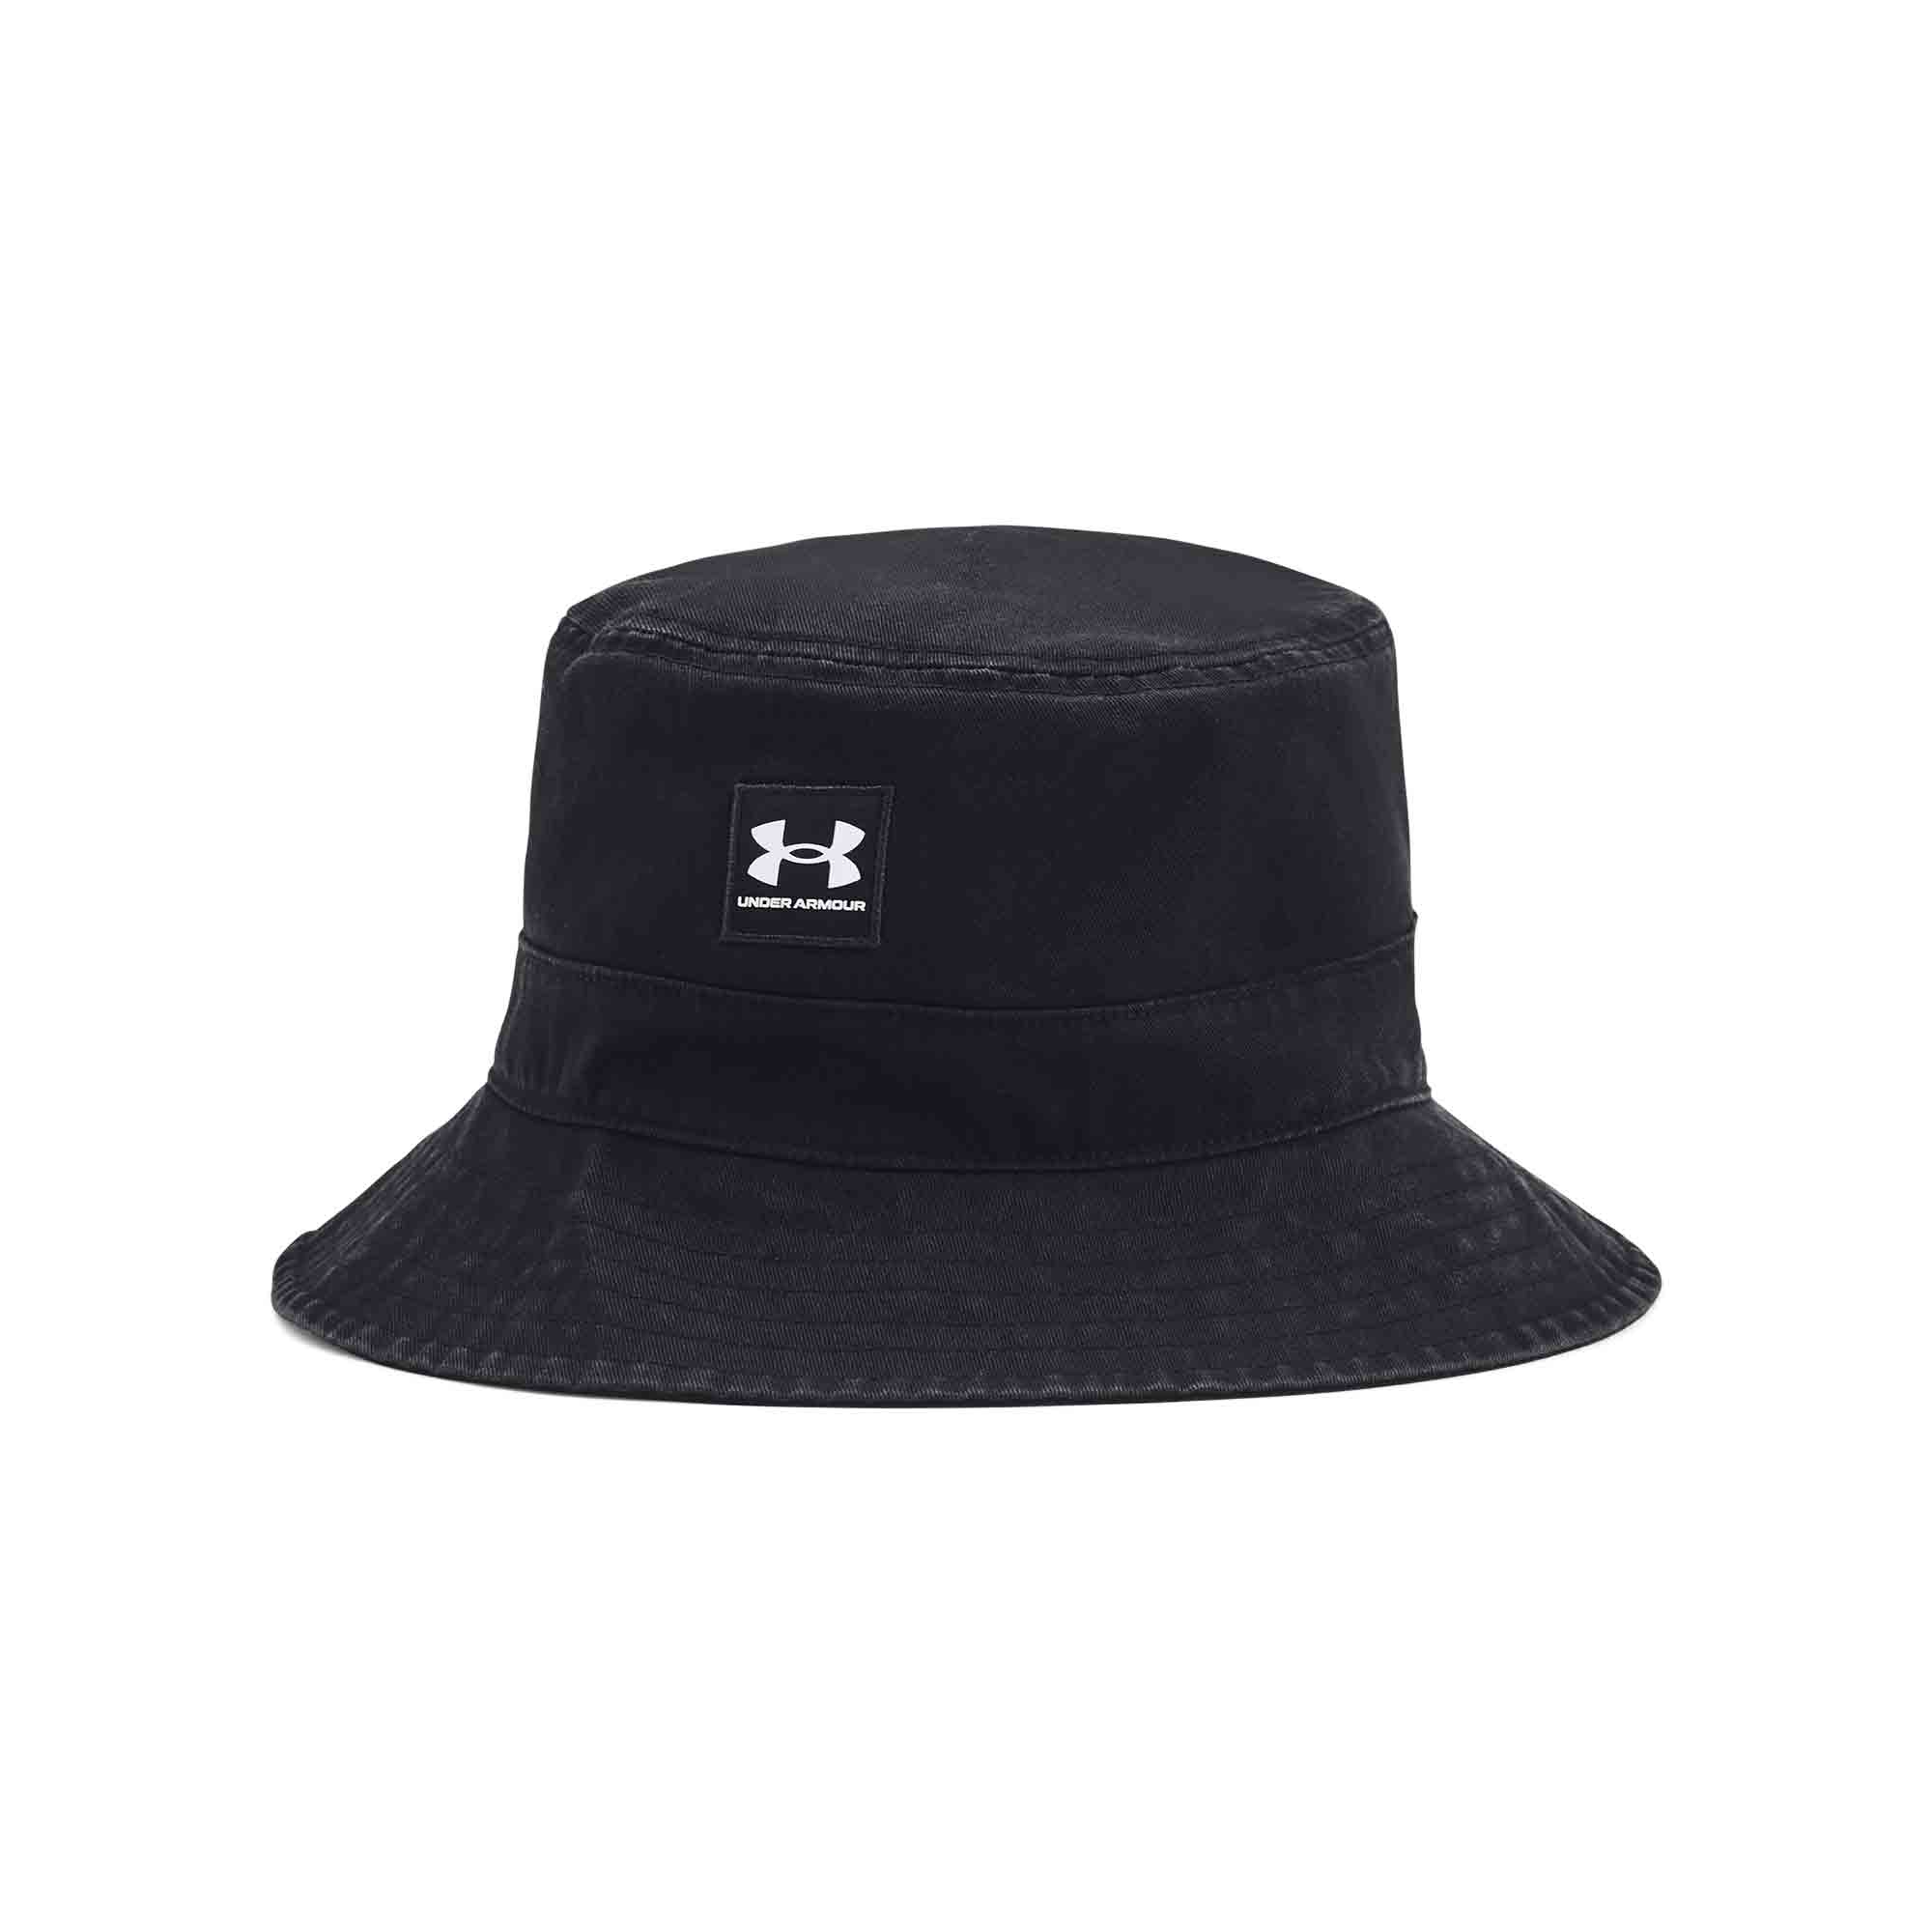 Under Armour Mens Branded Bucket Hat